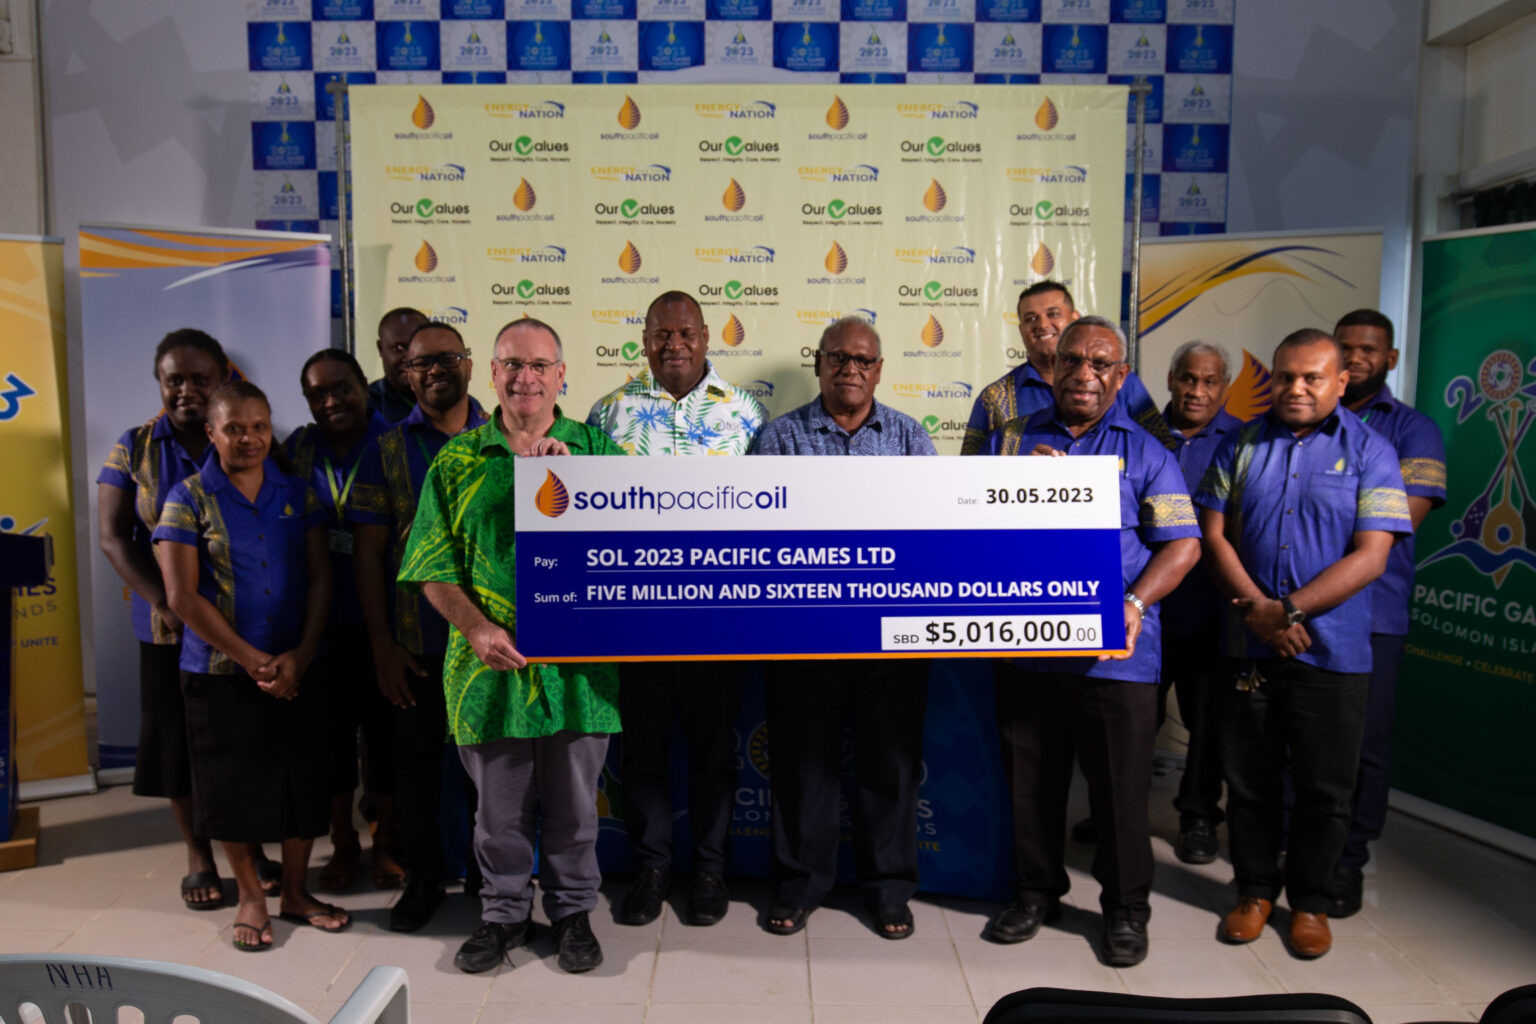 Solomon Islands 2023 fuel sponsorship hailed as "lifeline" for Pacifc Games